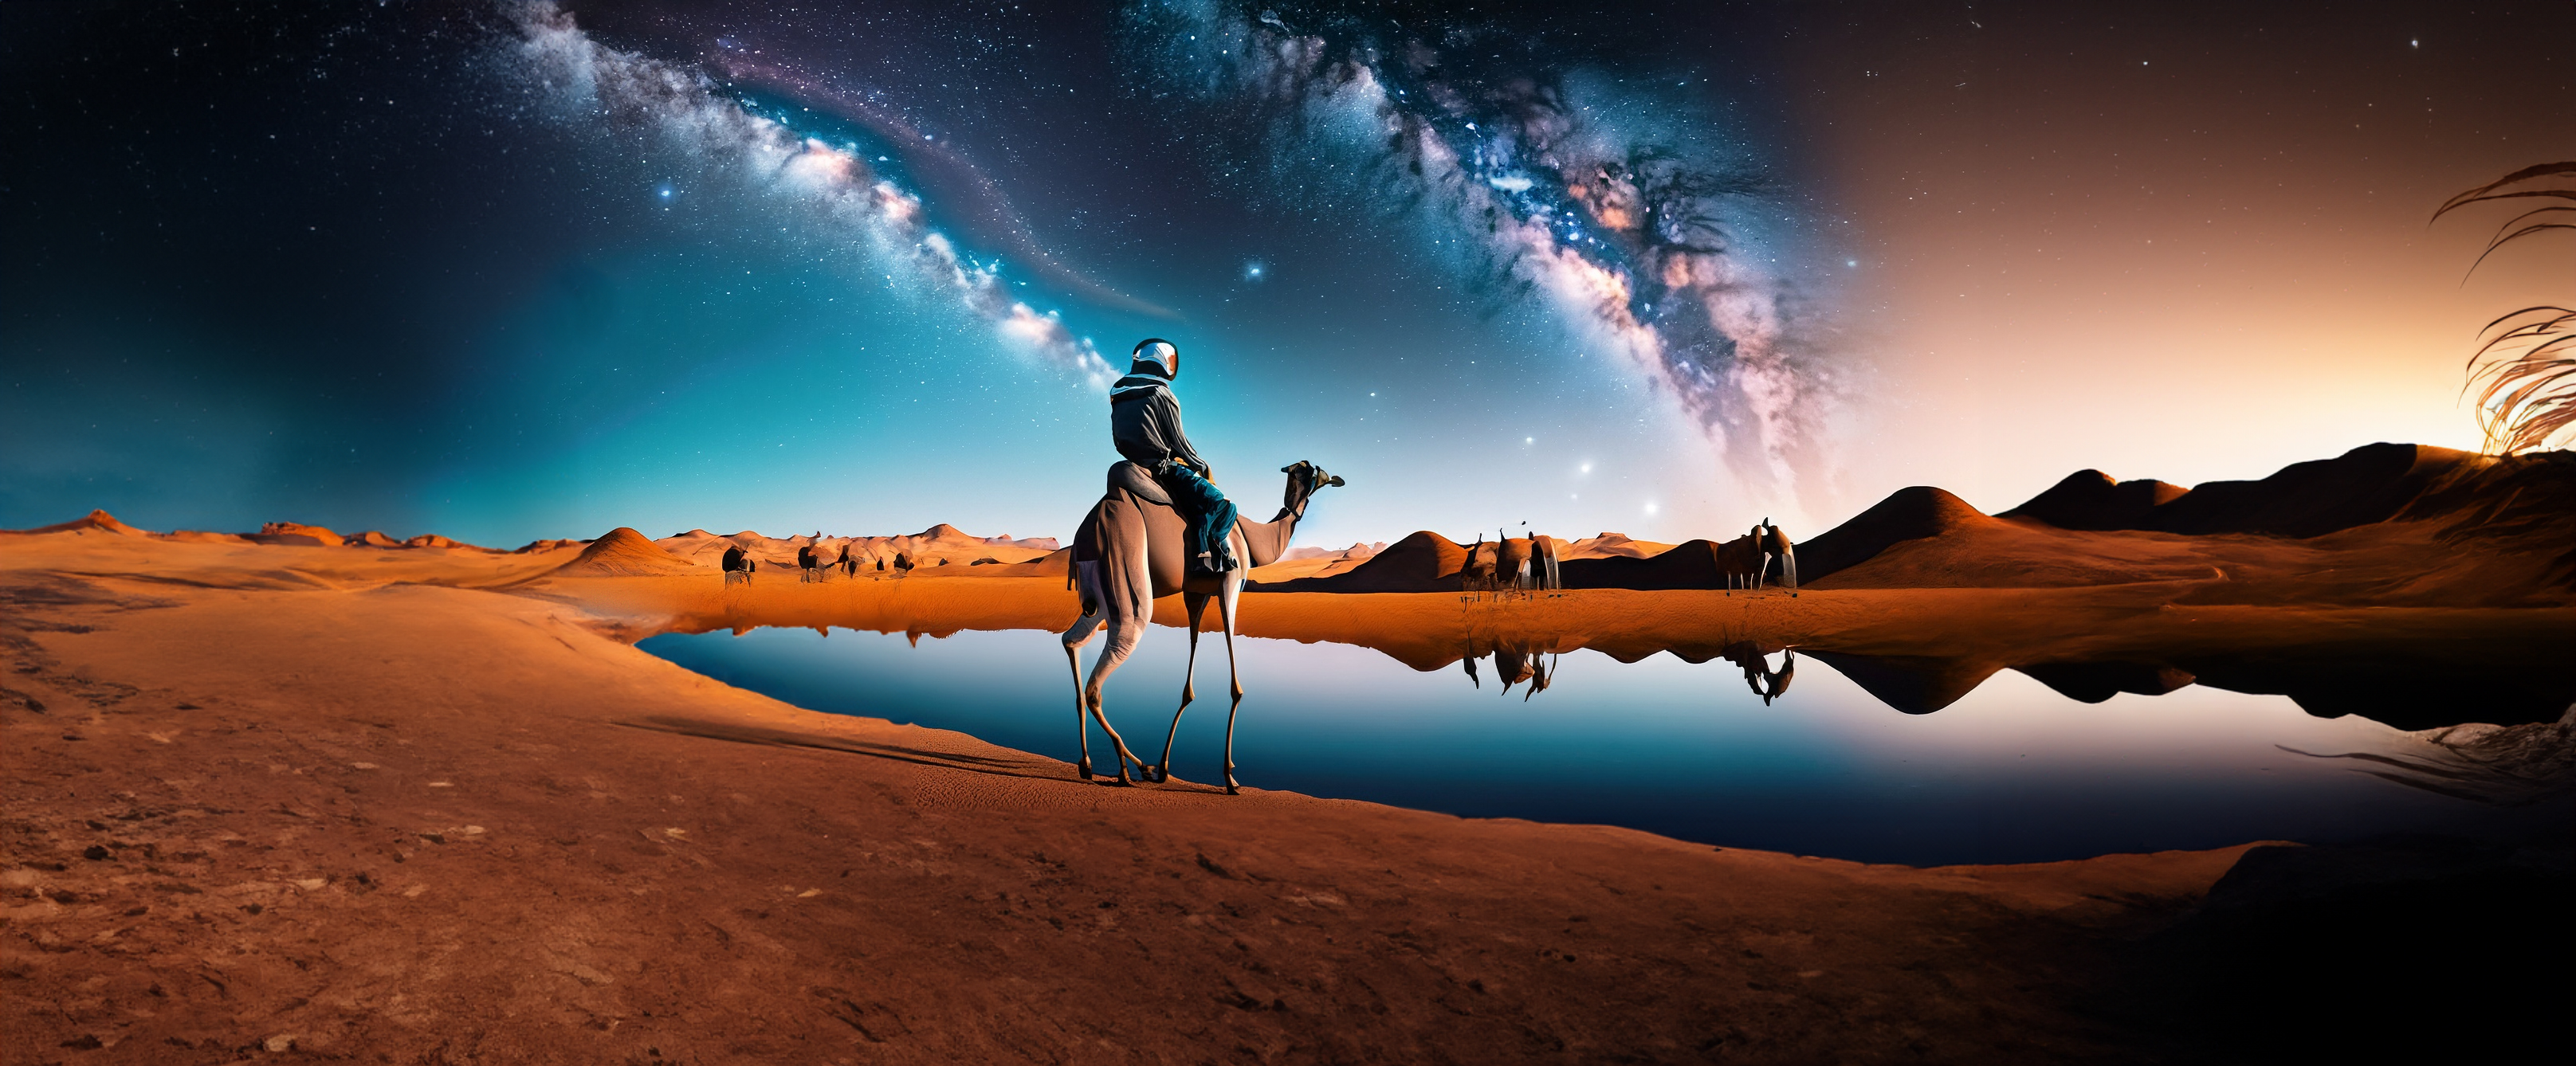 General 3232x1338 digital art space desert lake AI art water sky stars animals